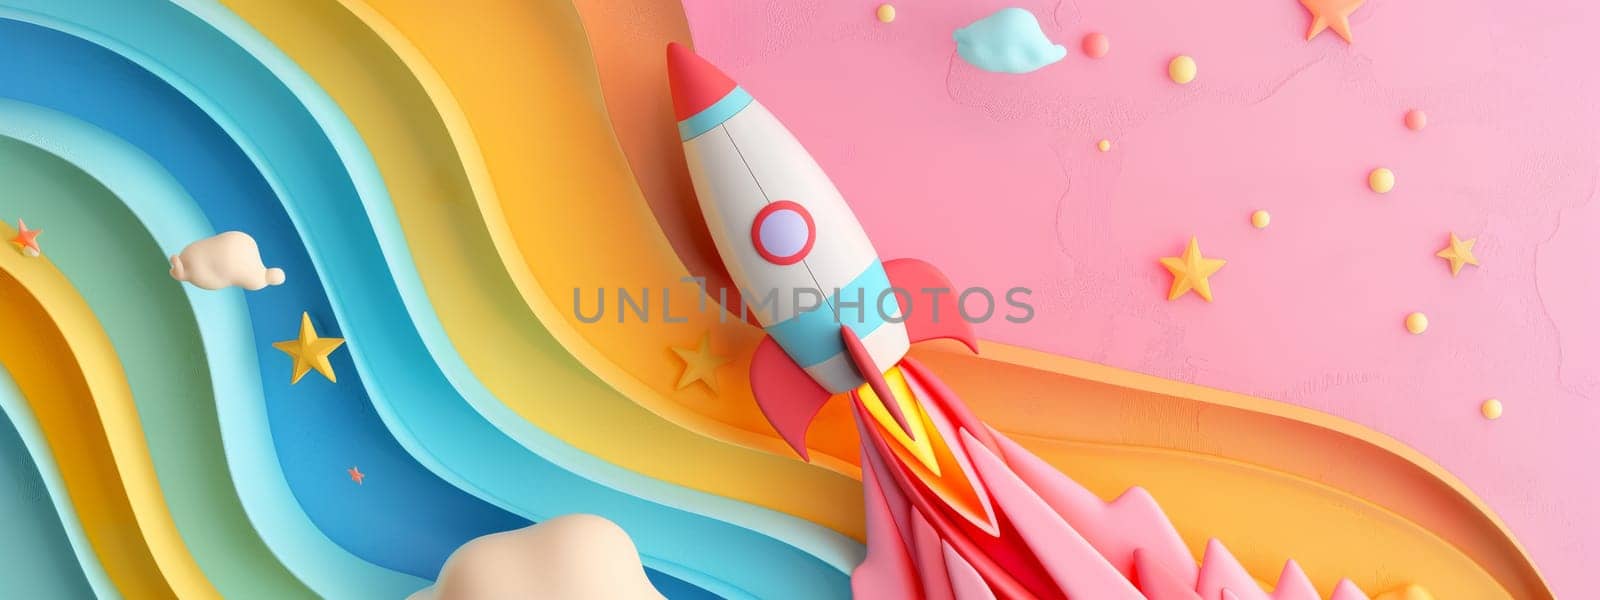 rocket on the pastel colorful background, child visualization concept by Kadula